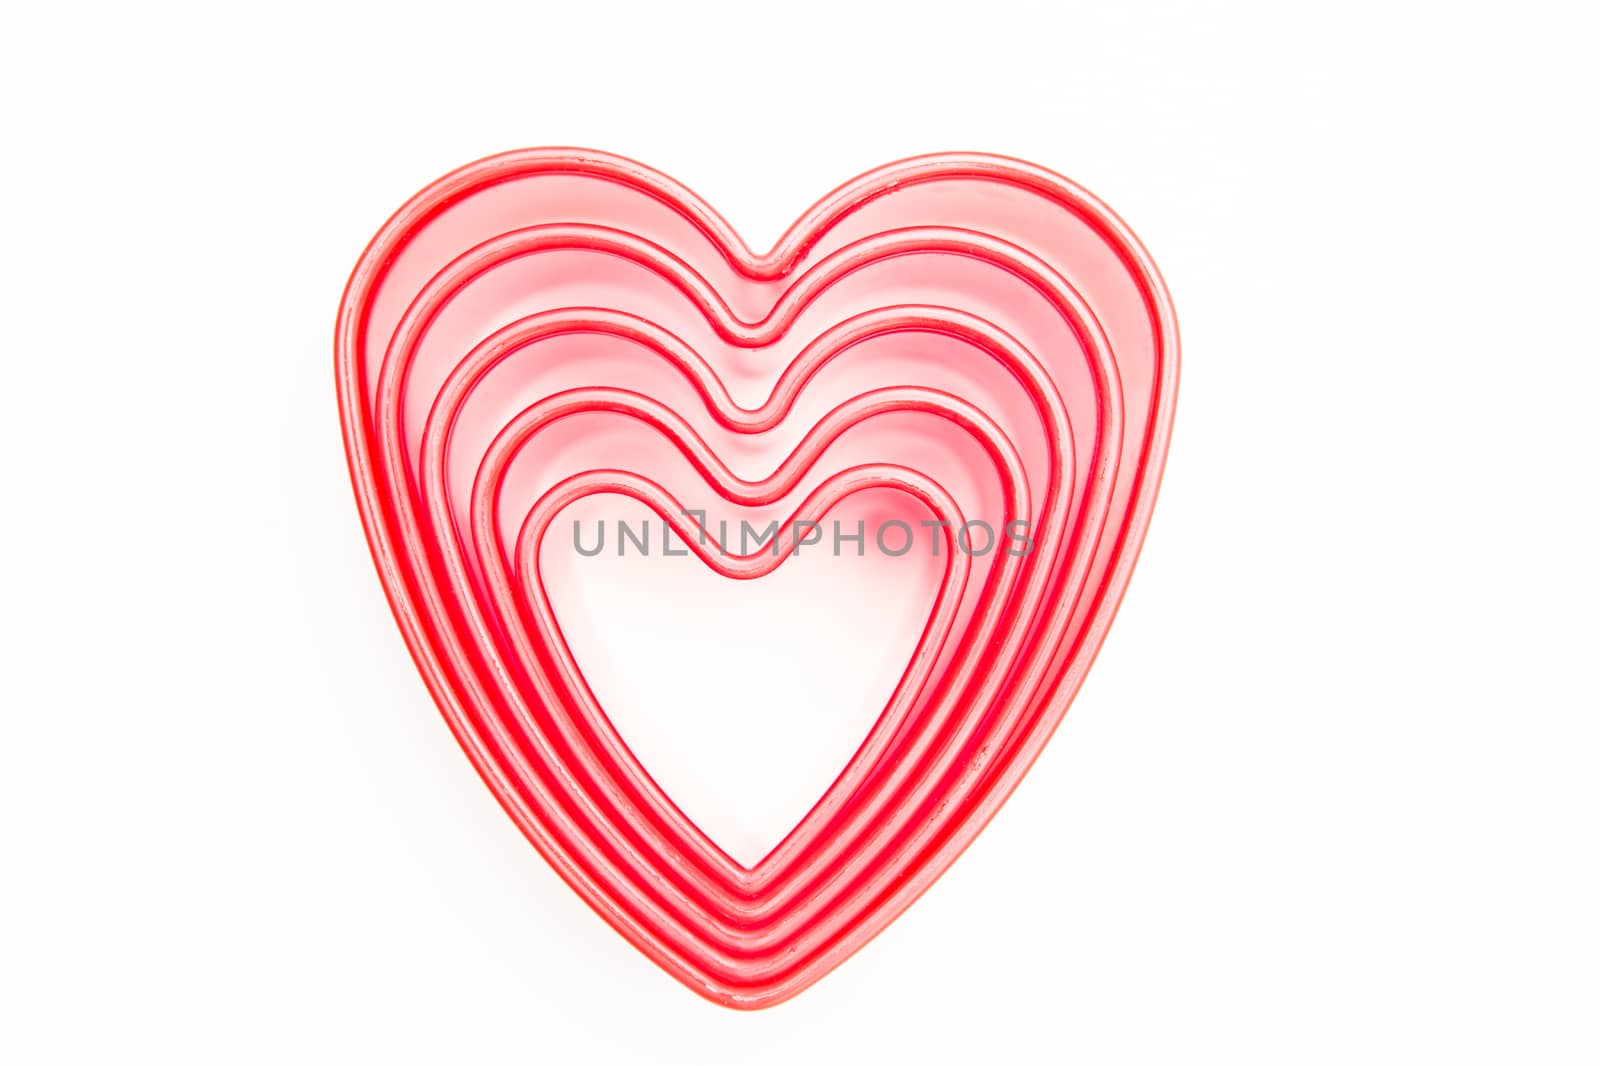 Pink heart cookie cutters by Wavebreakmedia